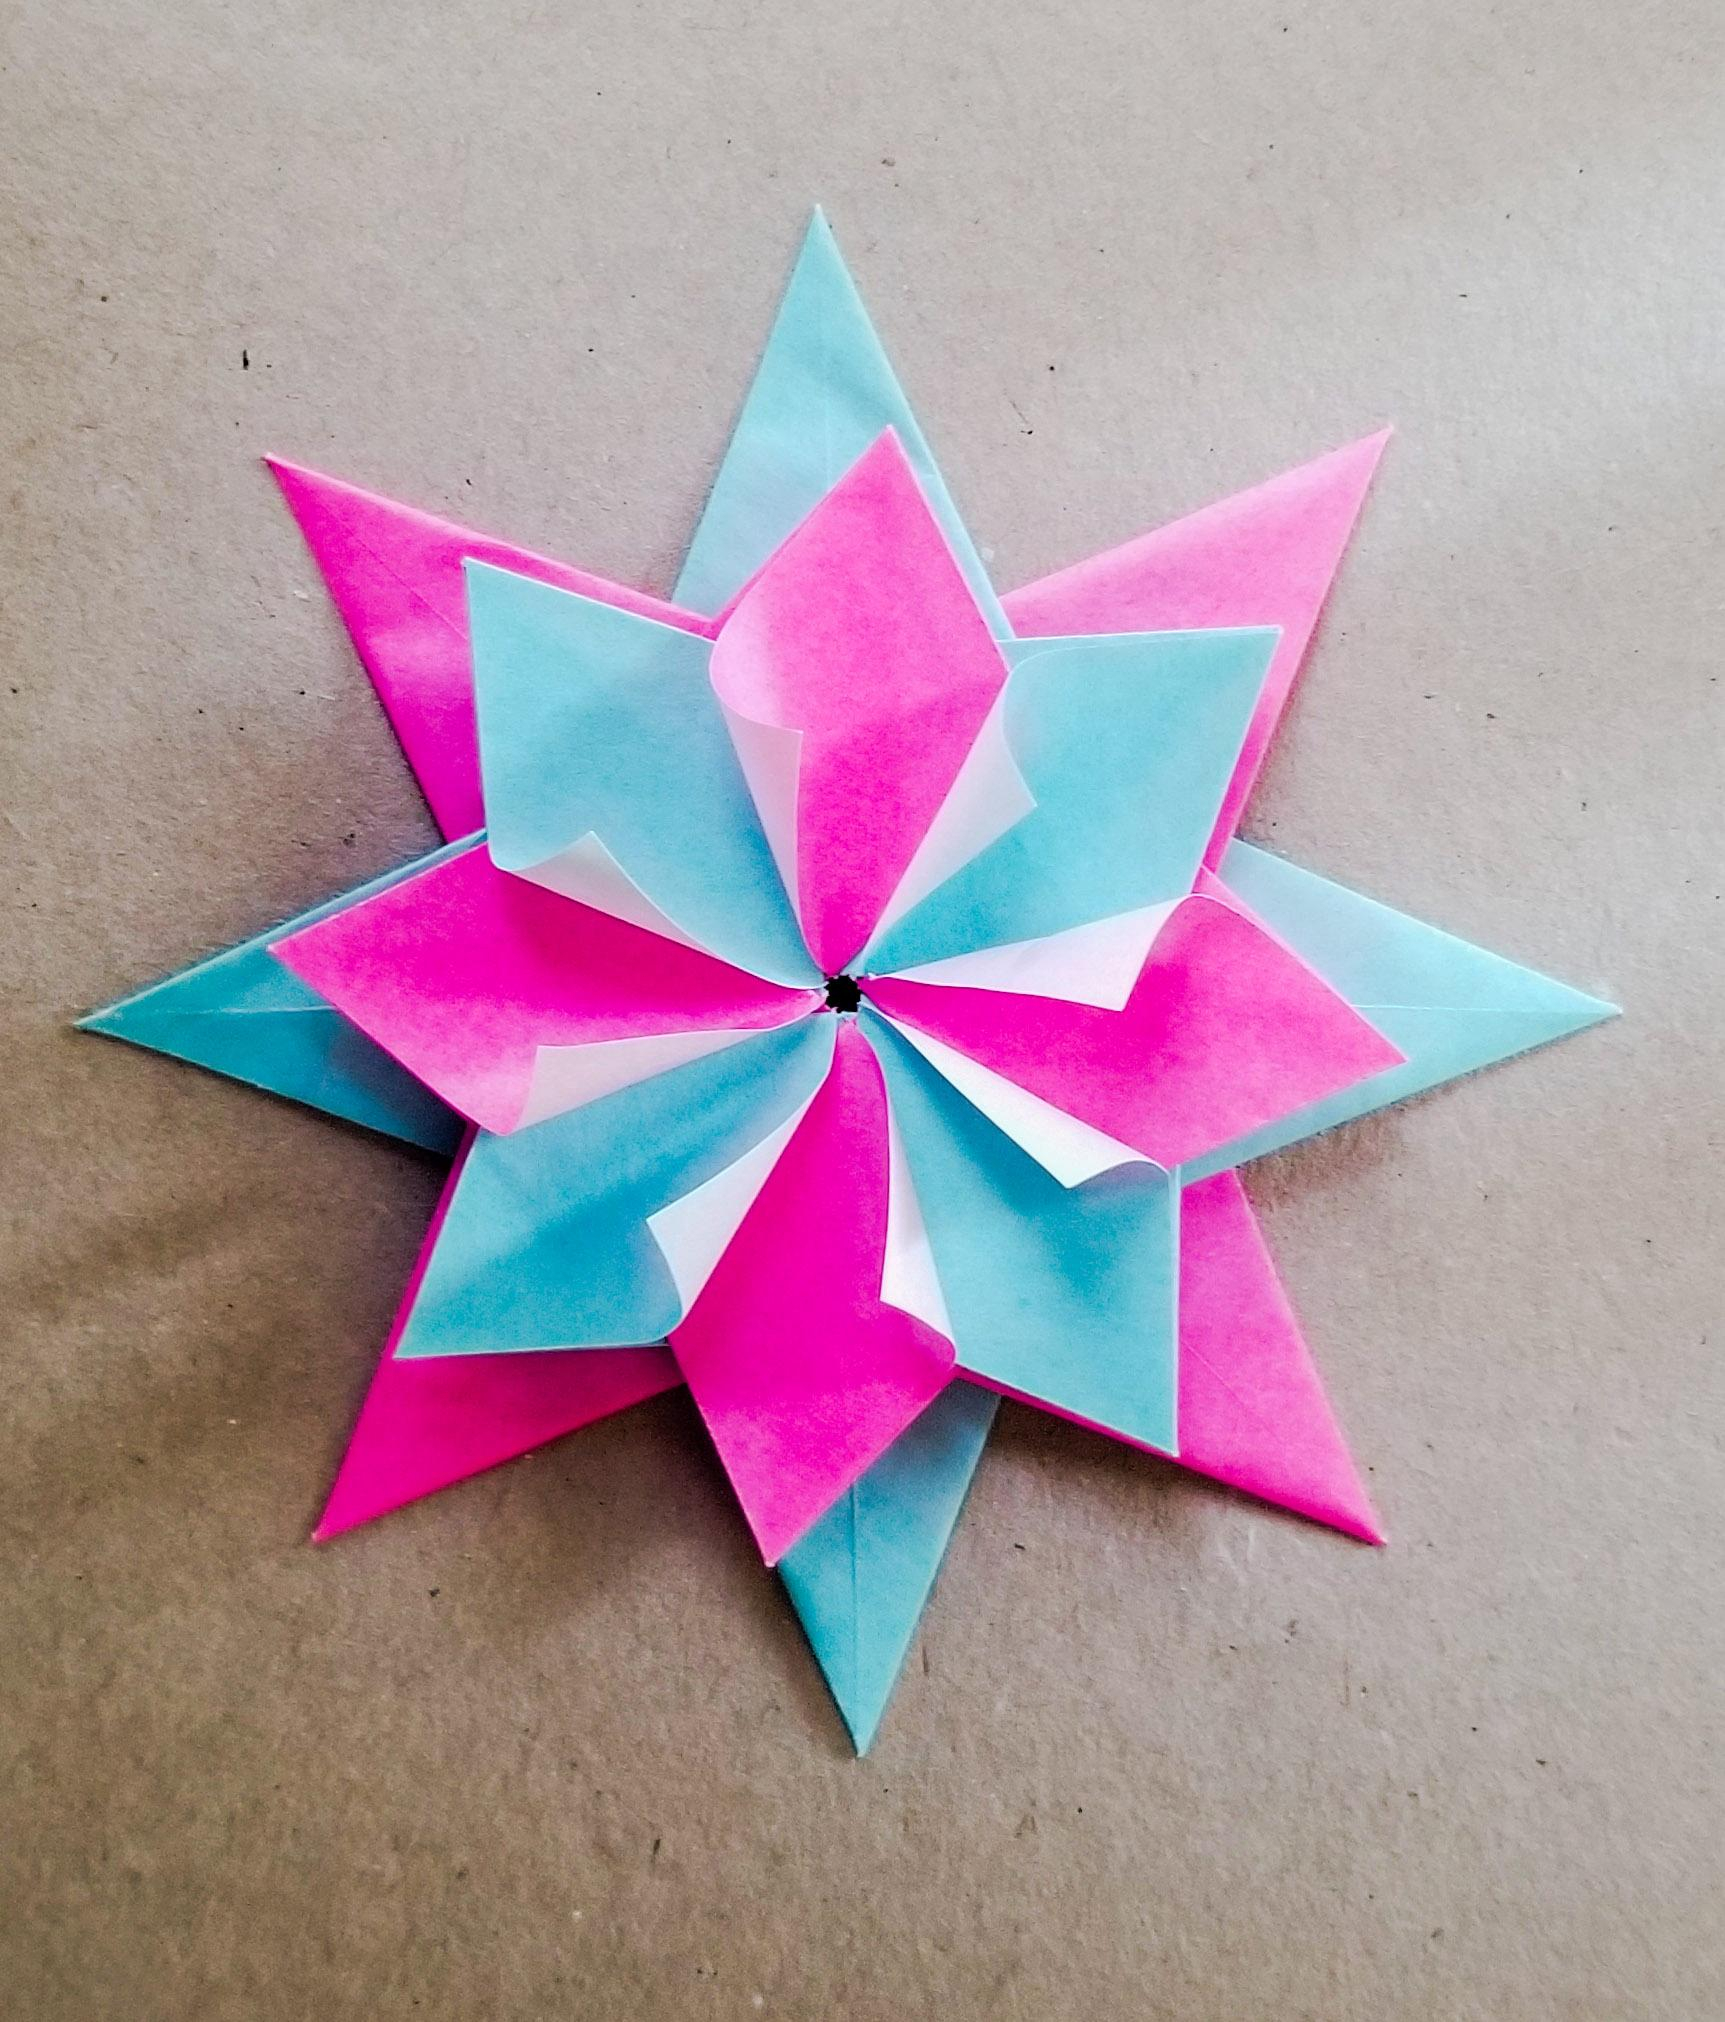 Origami Modular Star Modular Star Enrica Dray Photo Diagram Links In Comments Origami